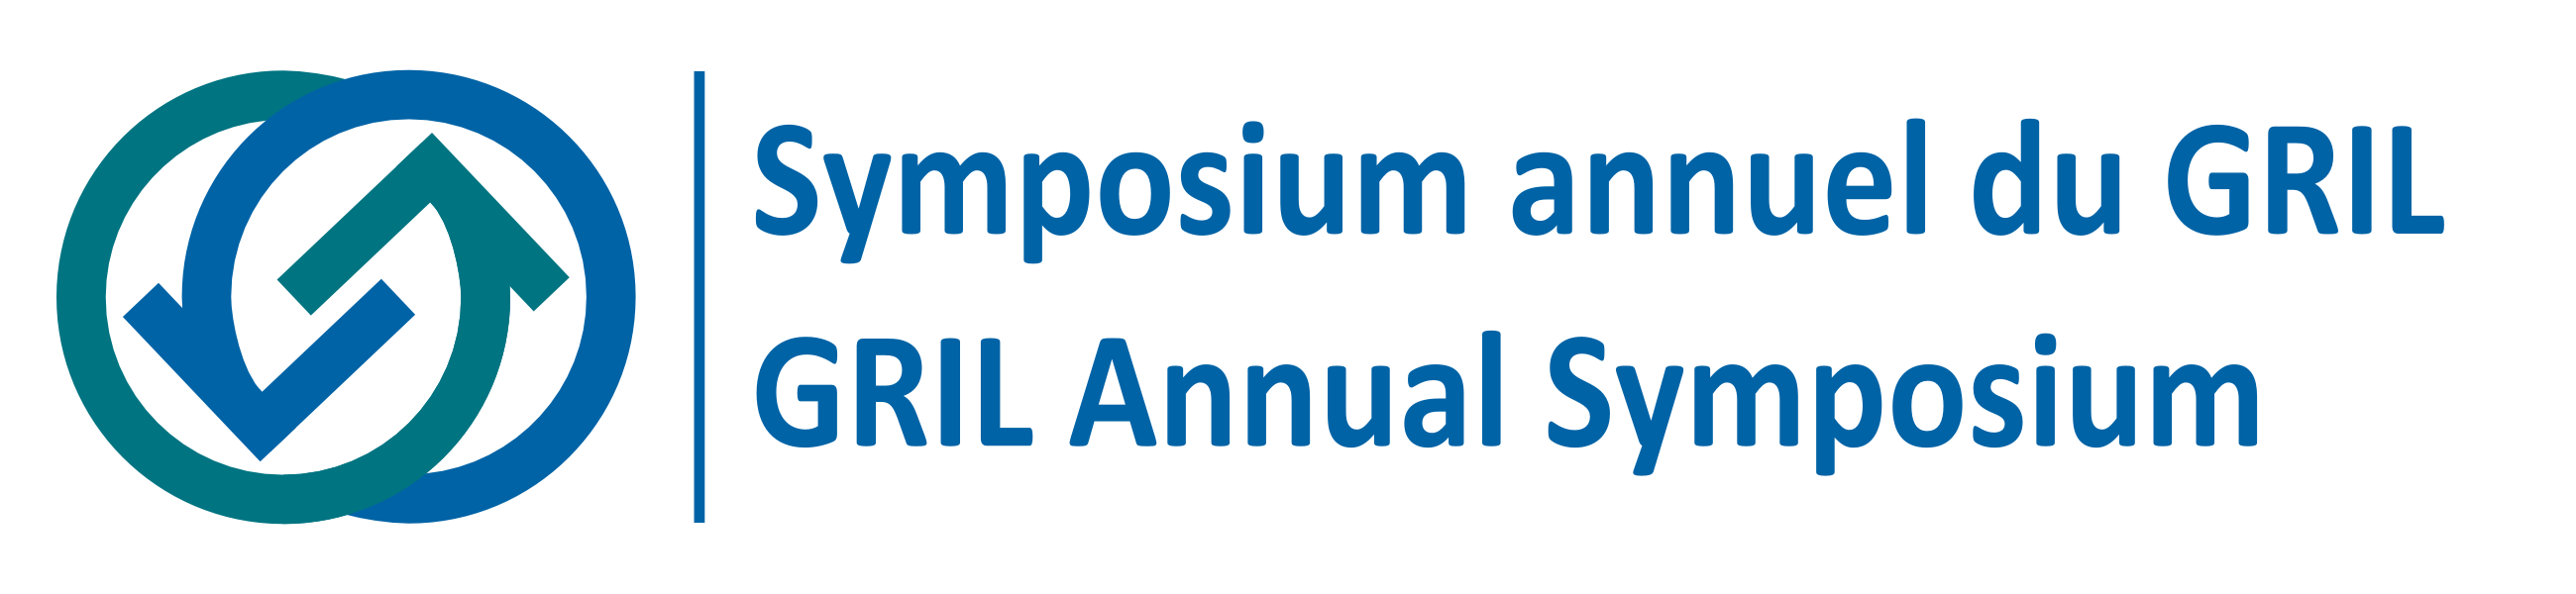 Logo_GRIL_Symposium